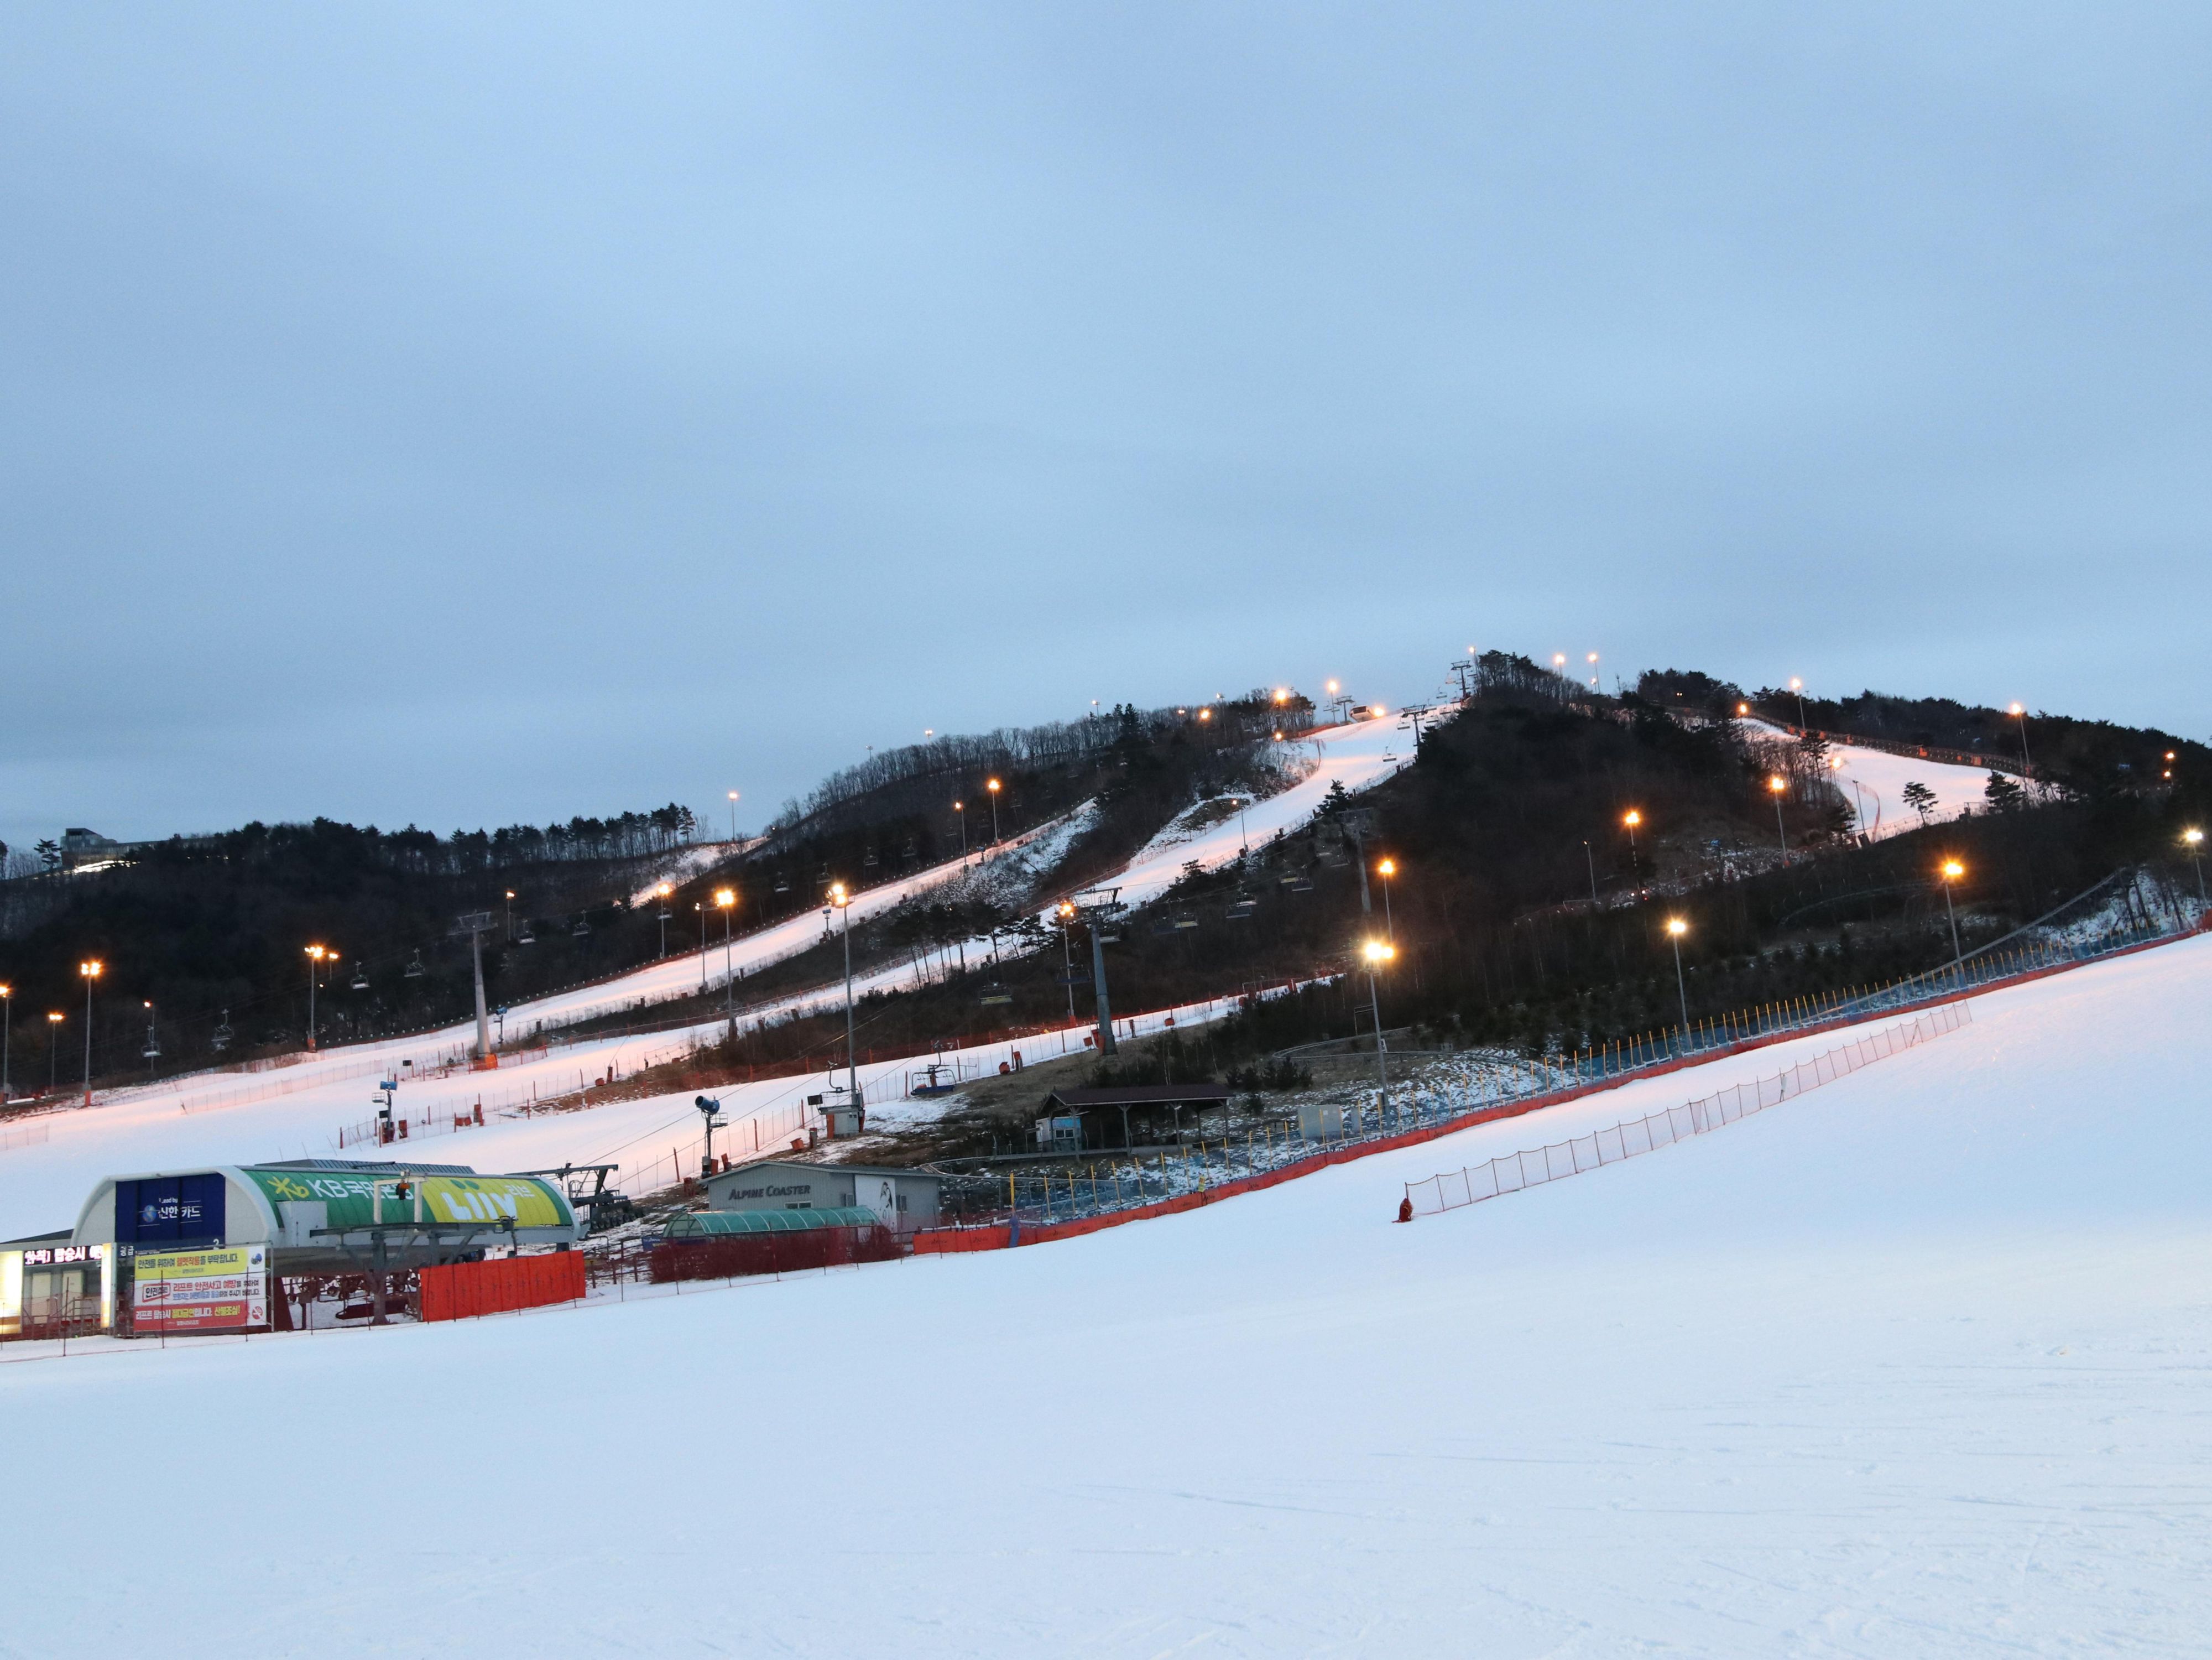 Enjoy Winter Exciting Ski Activity!